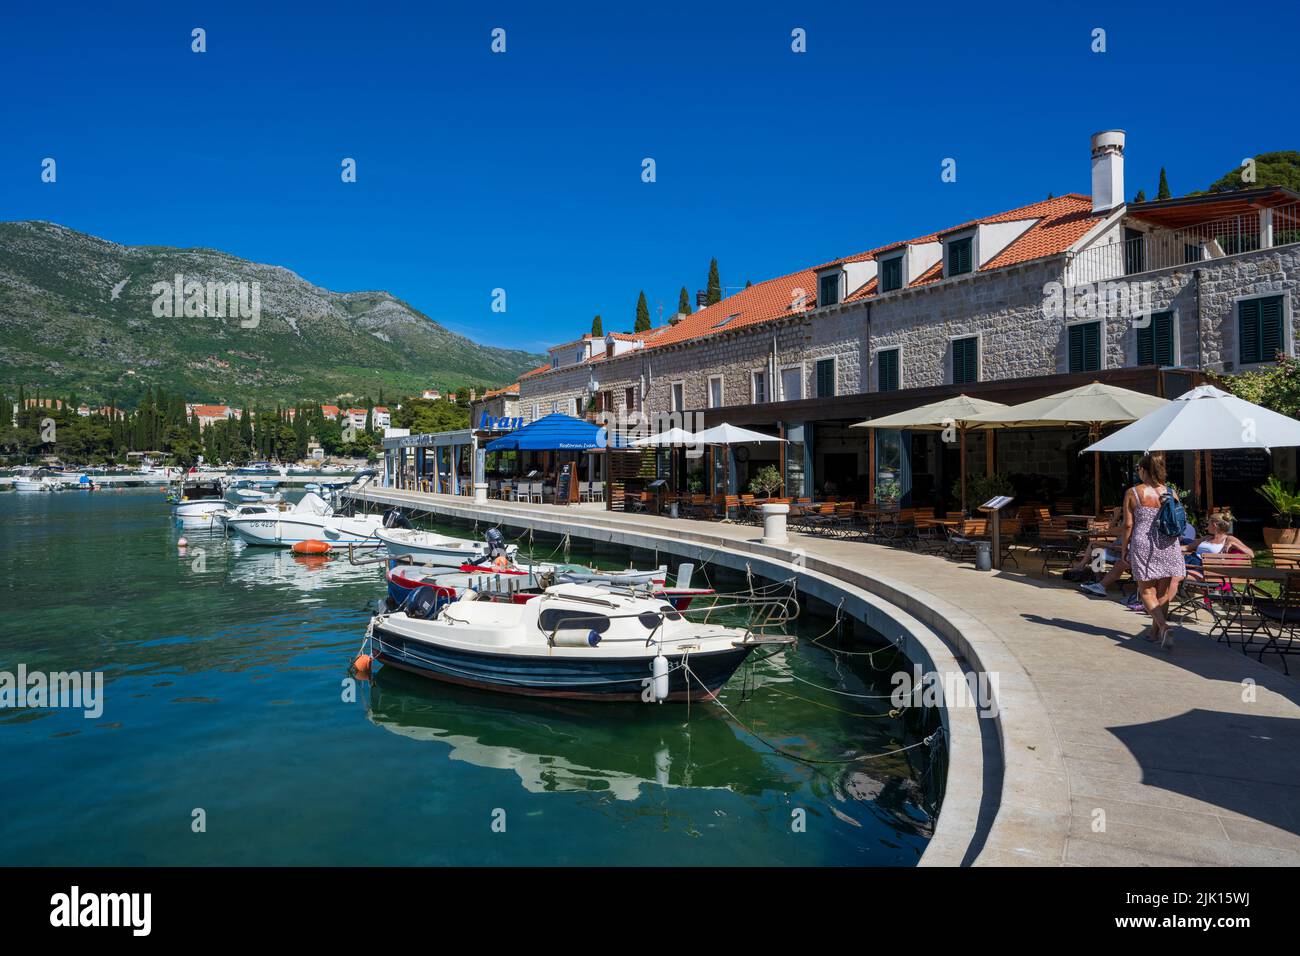 Harbour view of Cavtat, Cavtat on the Adriatic Sea, Cavtat, Dubrovnik Riviera, Croatia, Europe Stock Photo